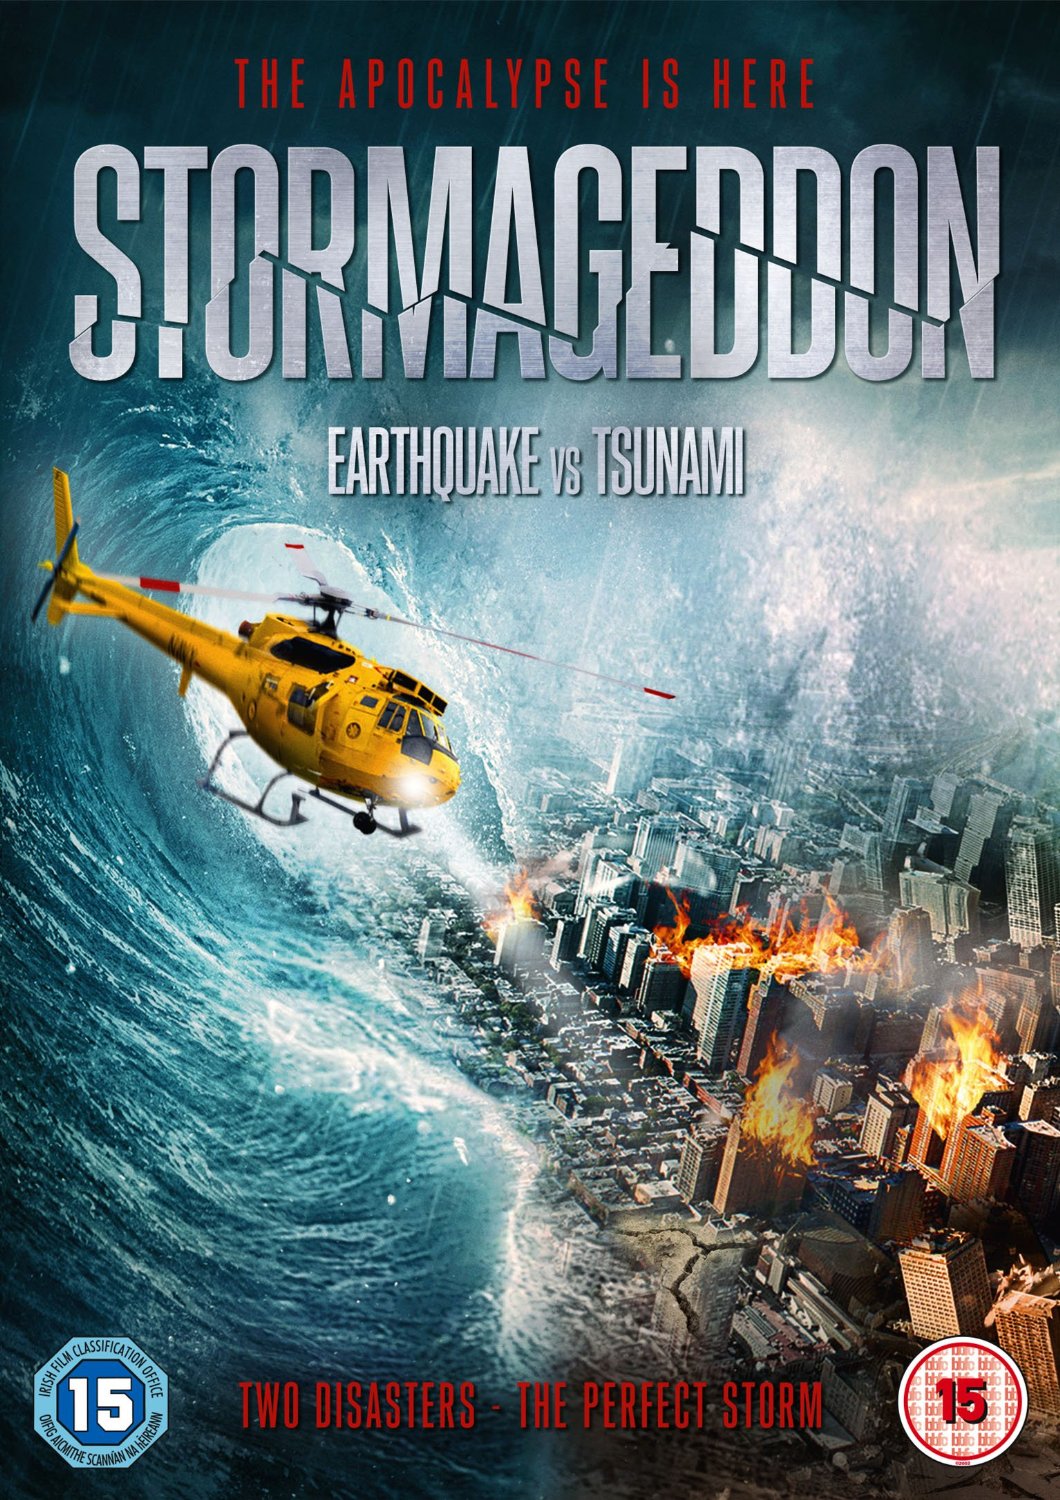 Stormageddon 2015